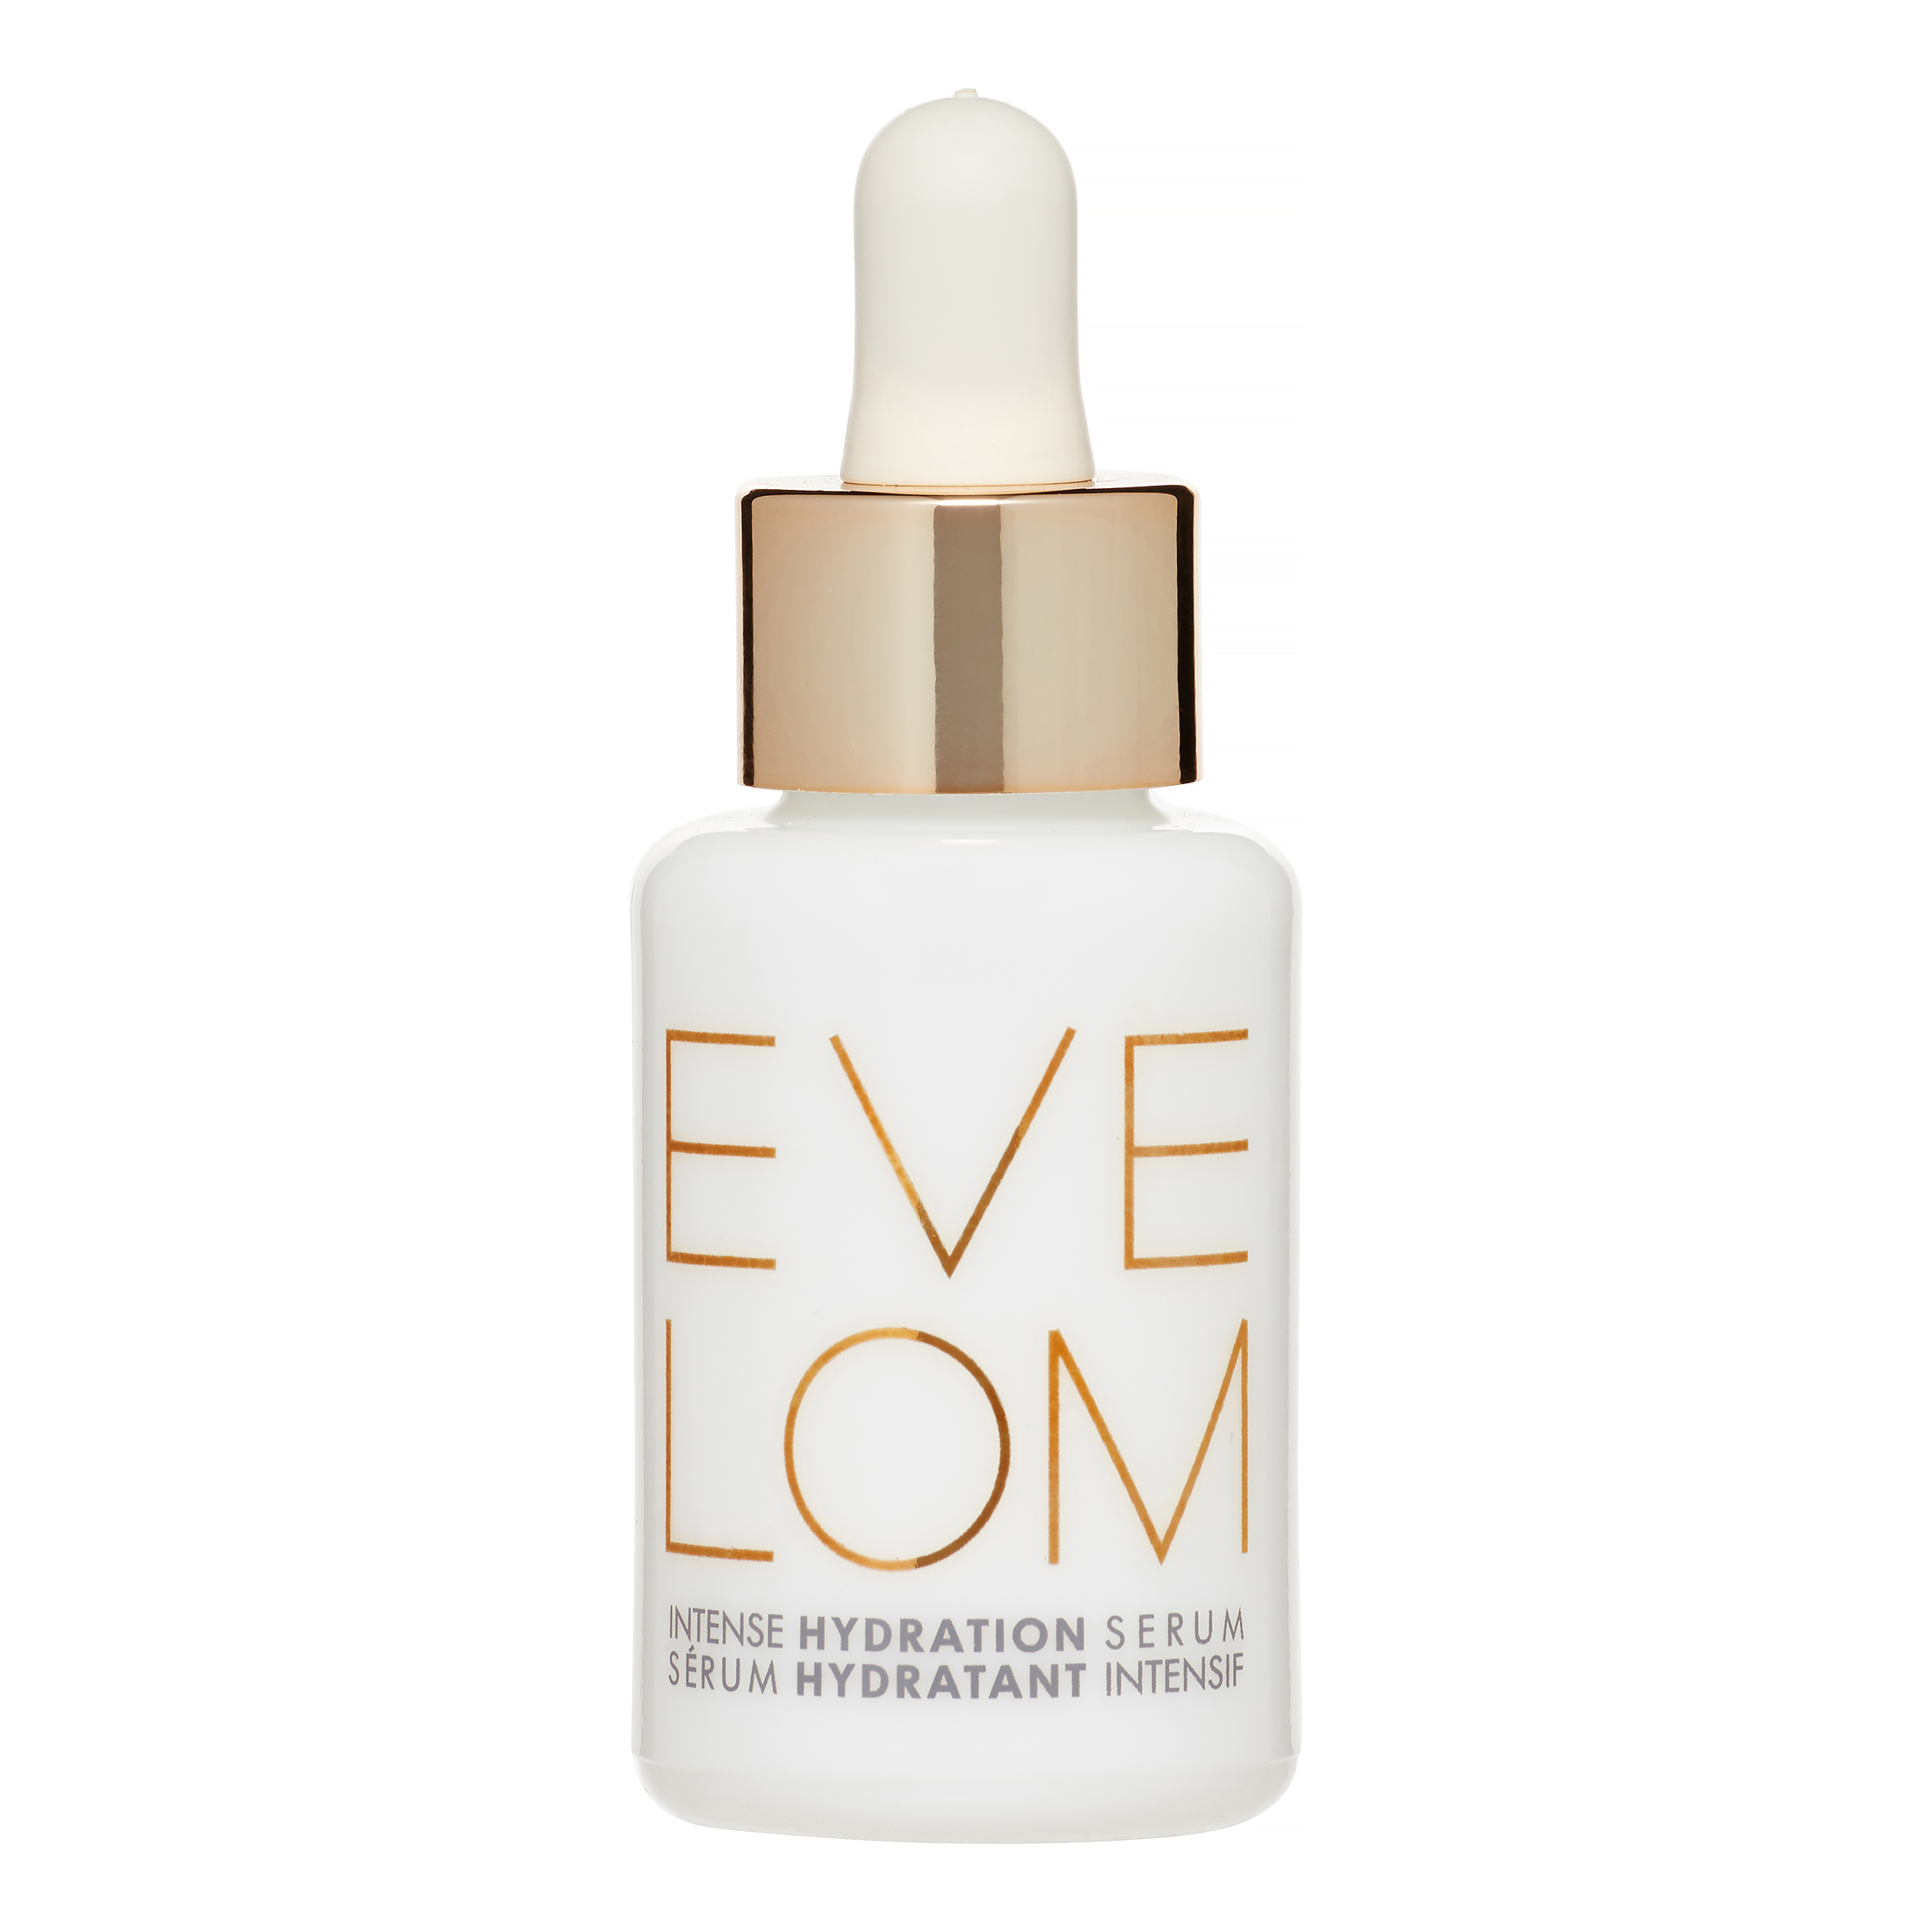 Eve Lom Intense Hydration Serum, 1 Oz